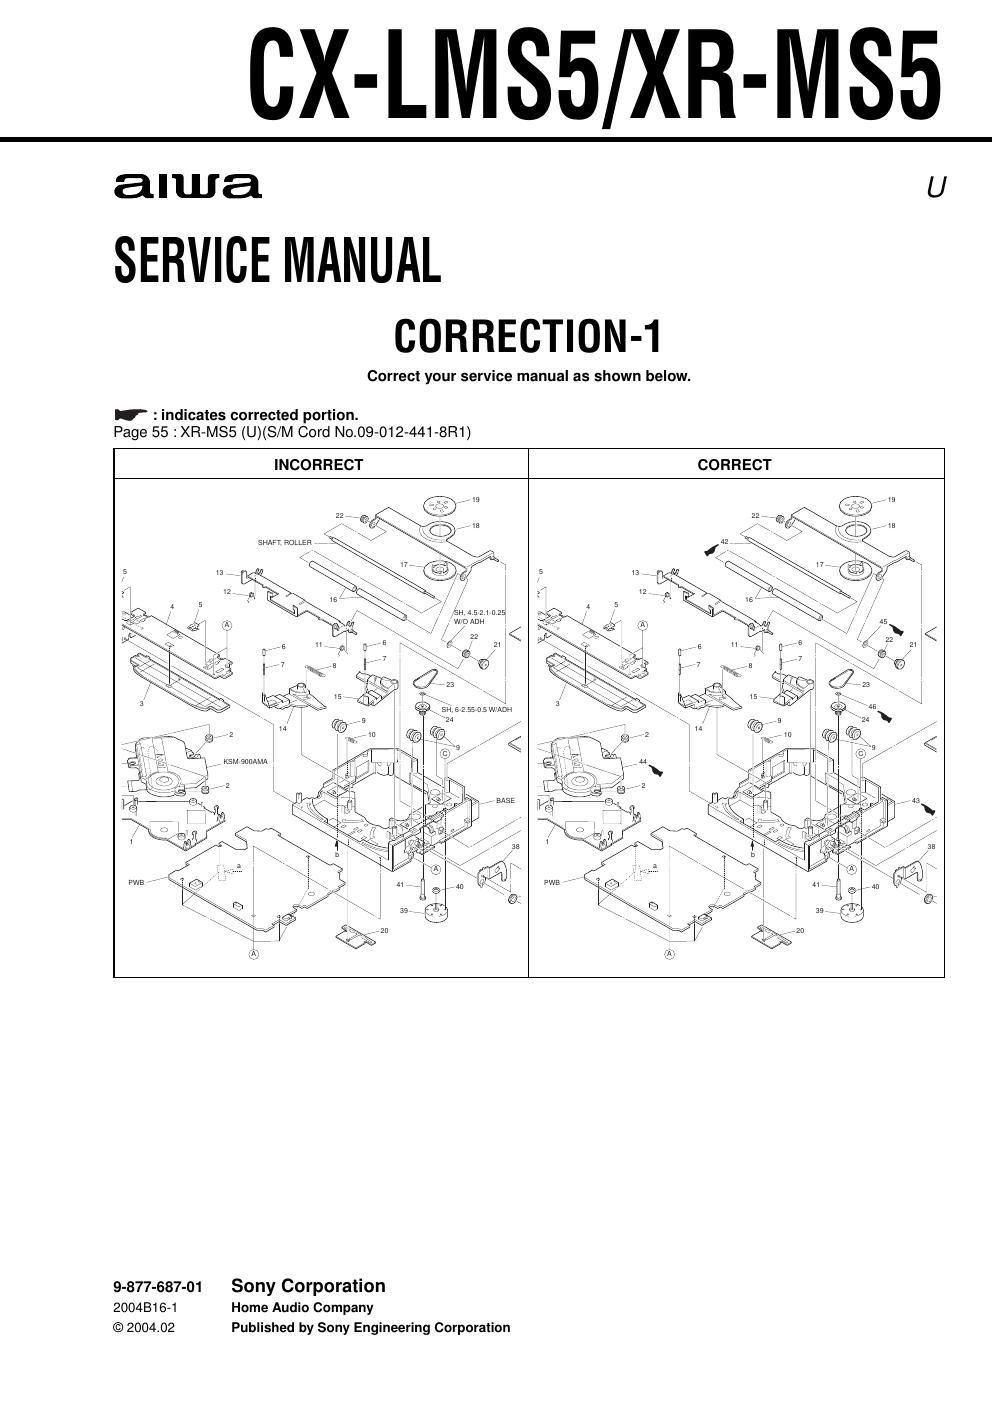 sony cx lms 5 service manual